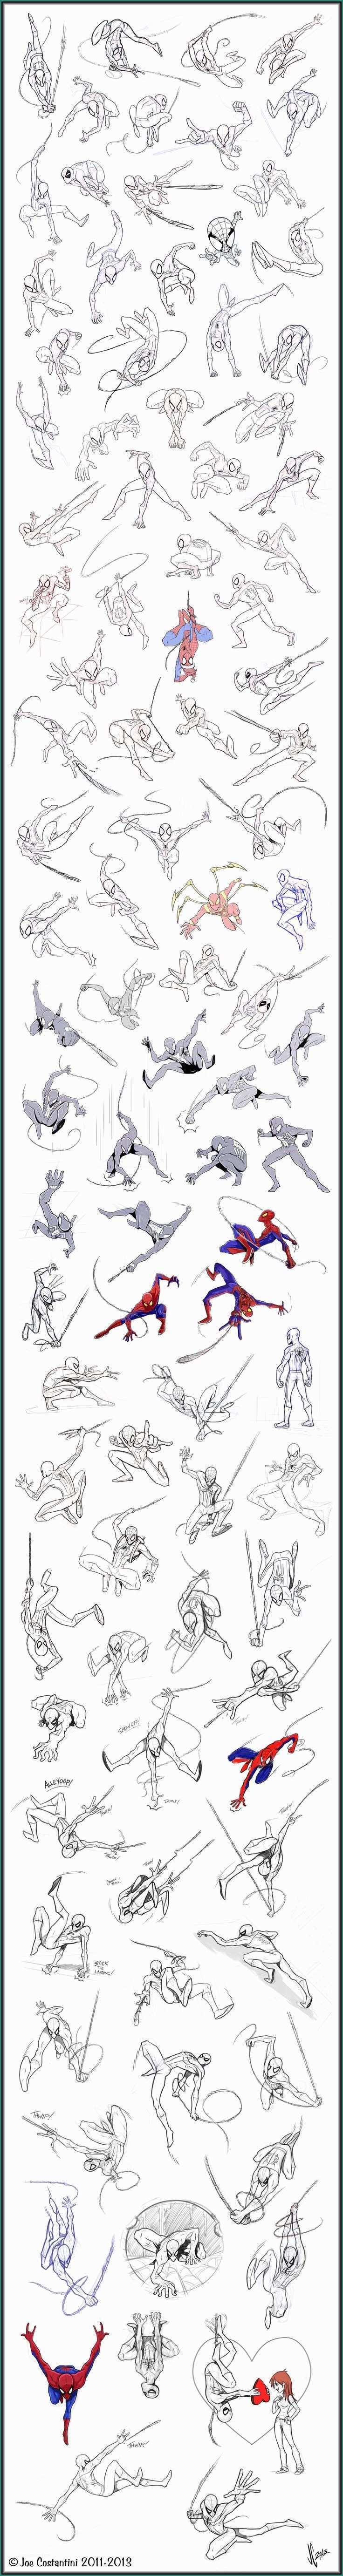 Spiderman Da Disegnare E 86 Best Reference Images On Pinterest